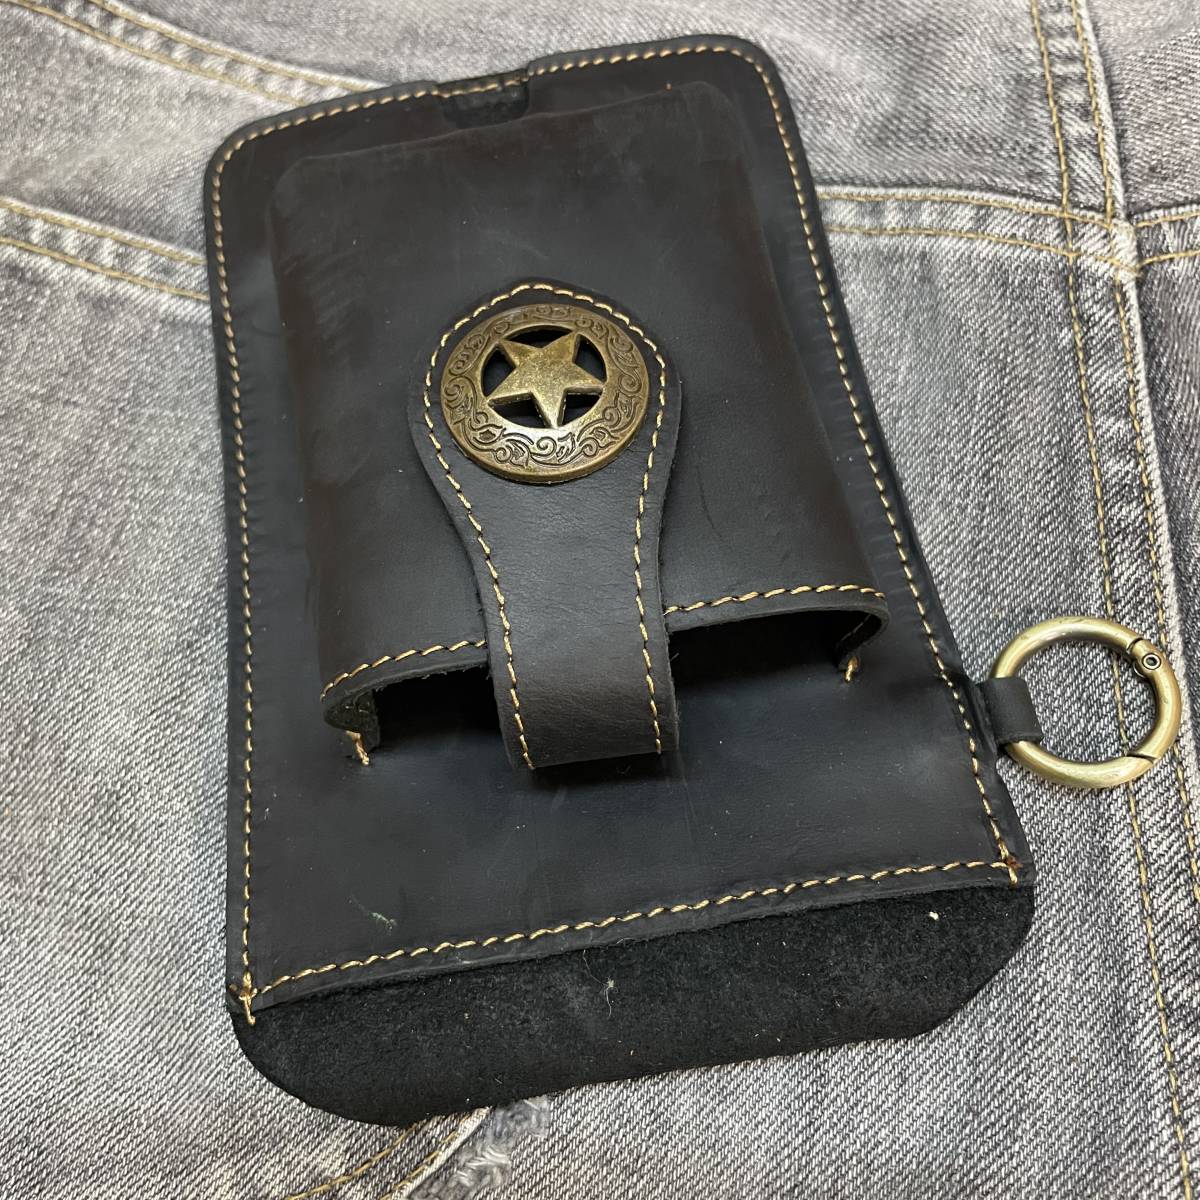  new goods original leather waist bag smartphone bag n bag belt pouch iPhone key hook cigarettes inserting hip bag black black free shipping 